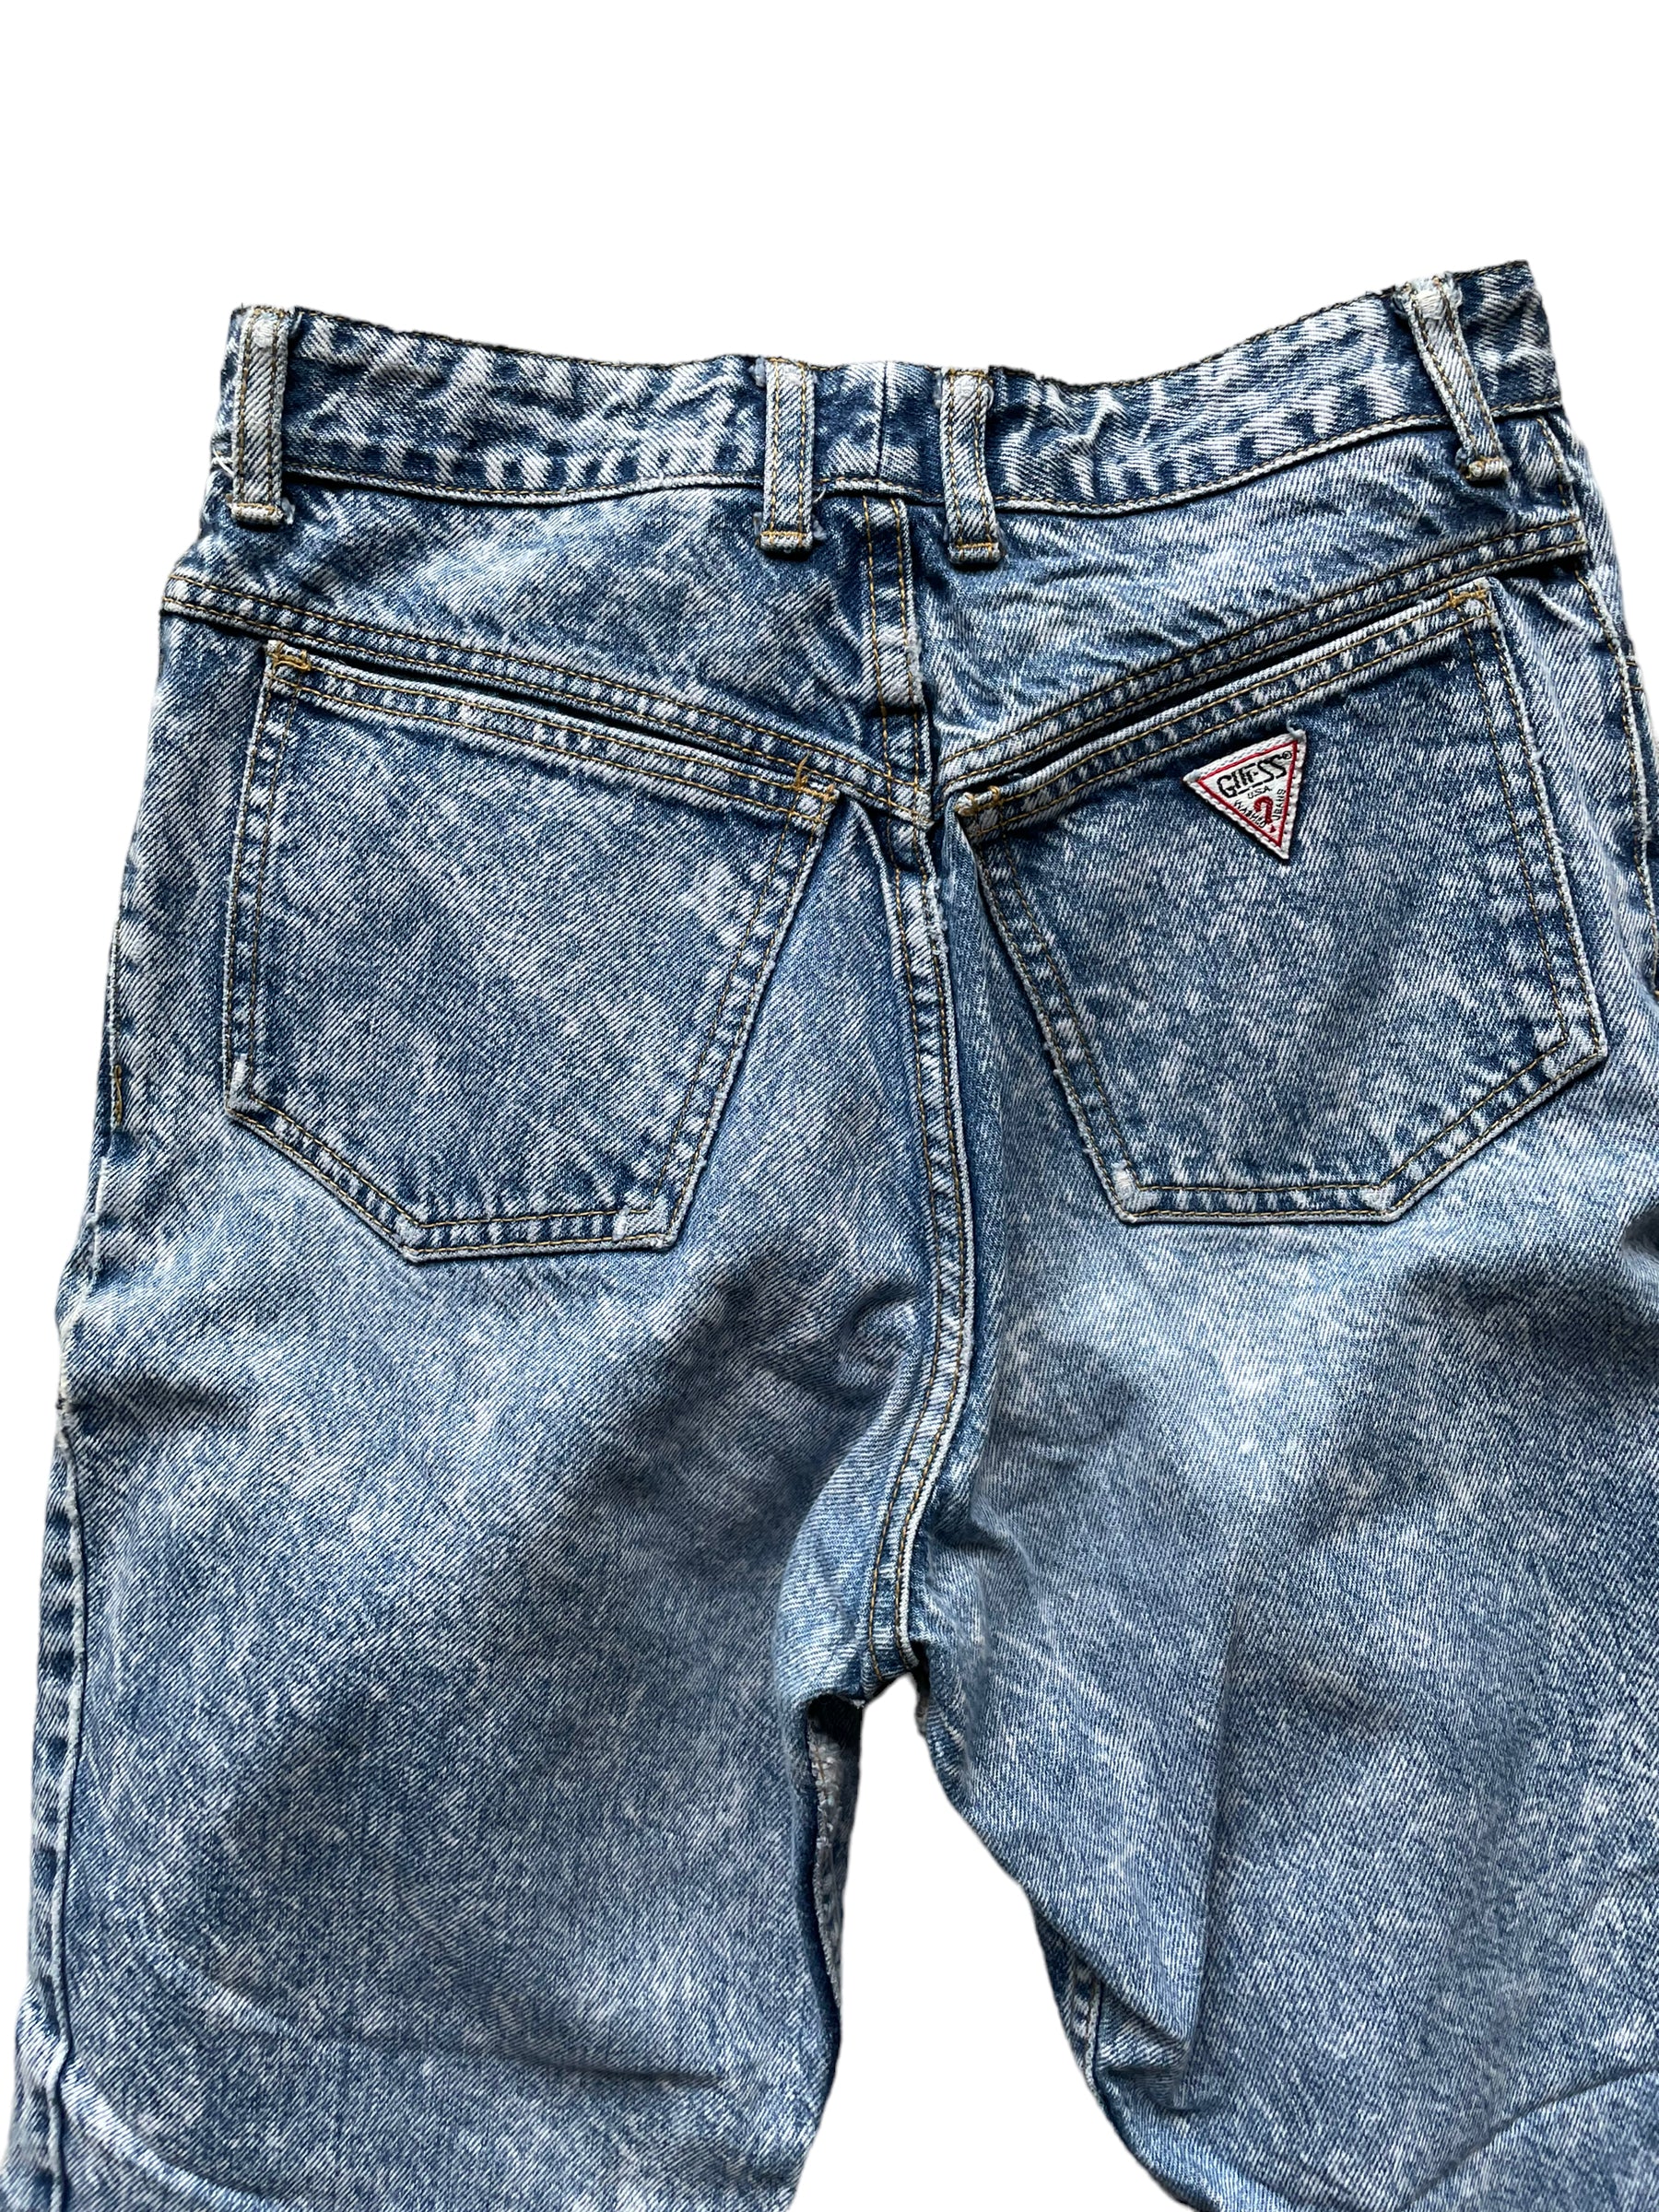 Back pocket view of Vintage 80s Ankle Zip Acid Wash Guess Jeans